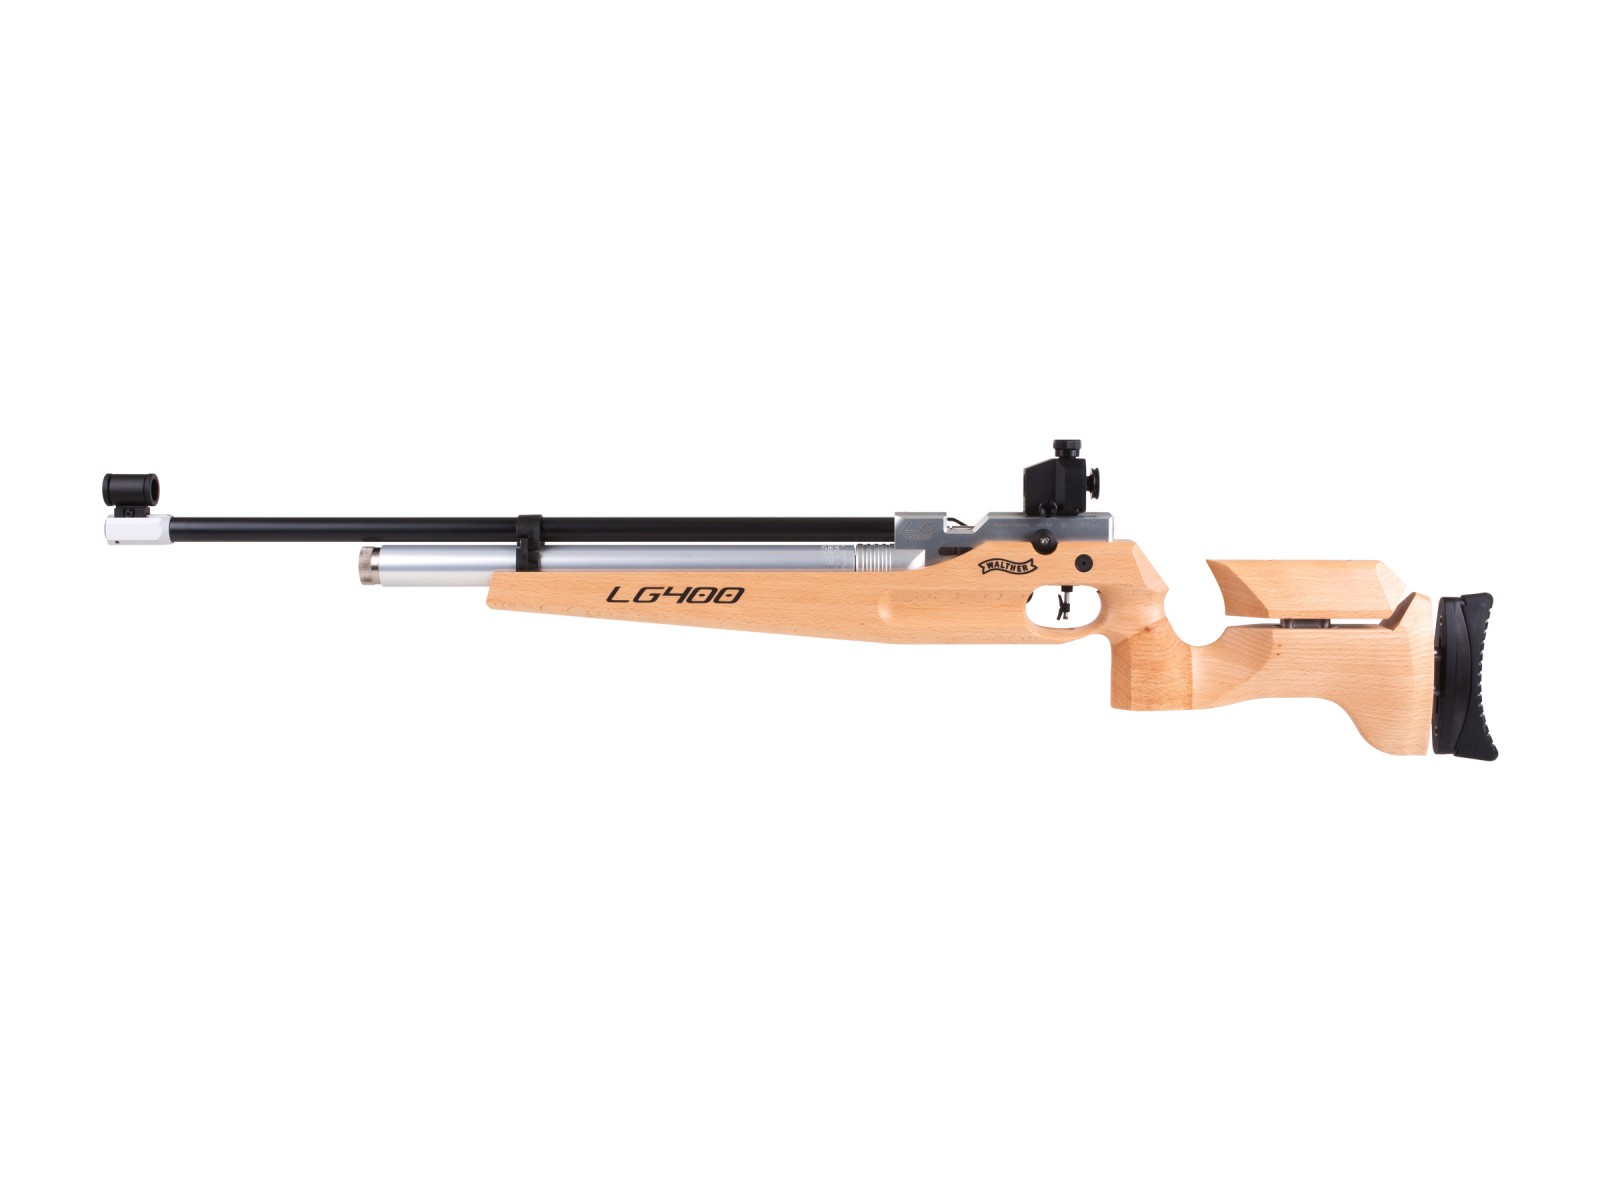 Walther LG400 Universal Air Rifle, Ambi Grip